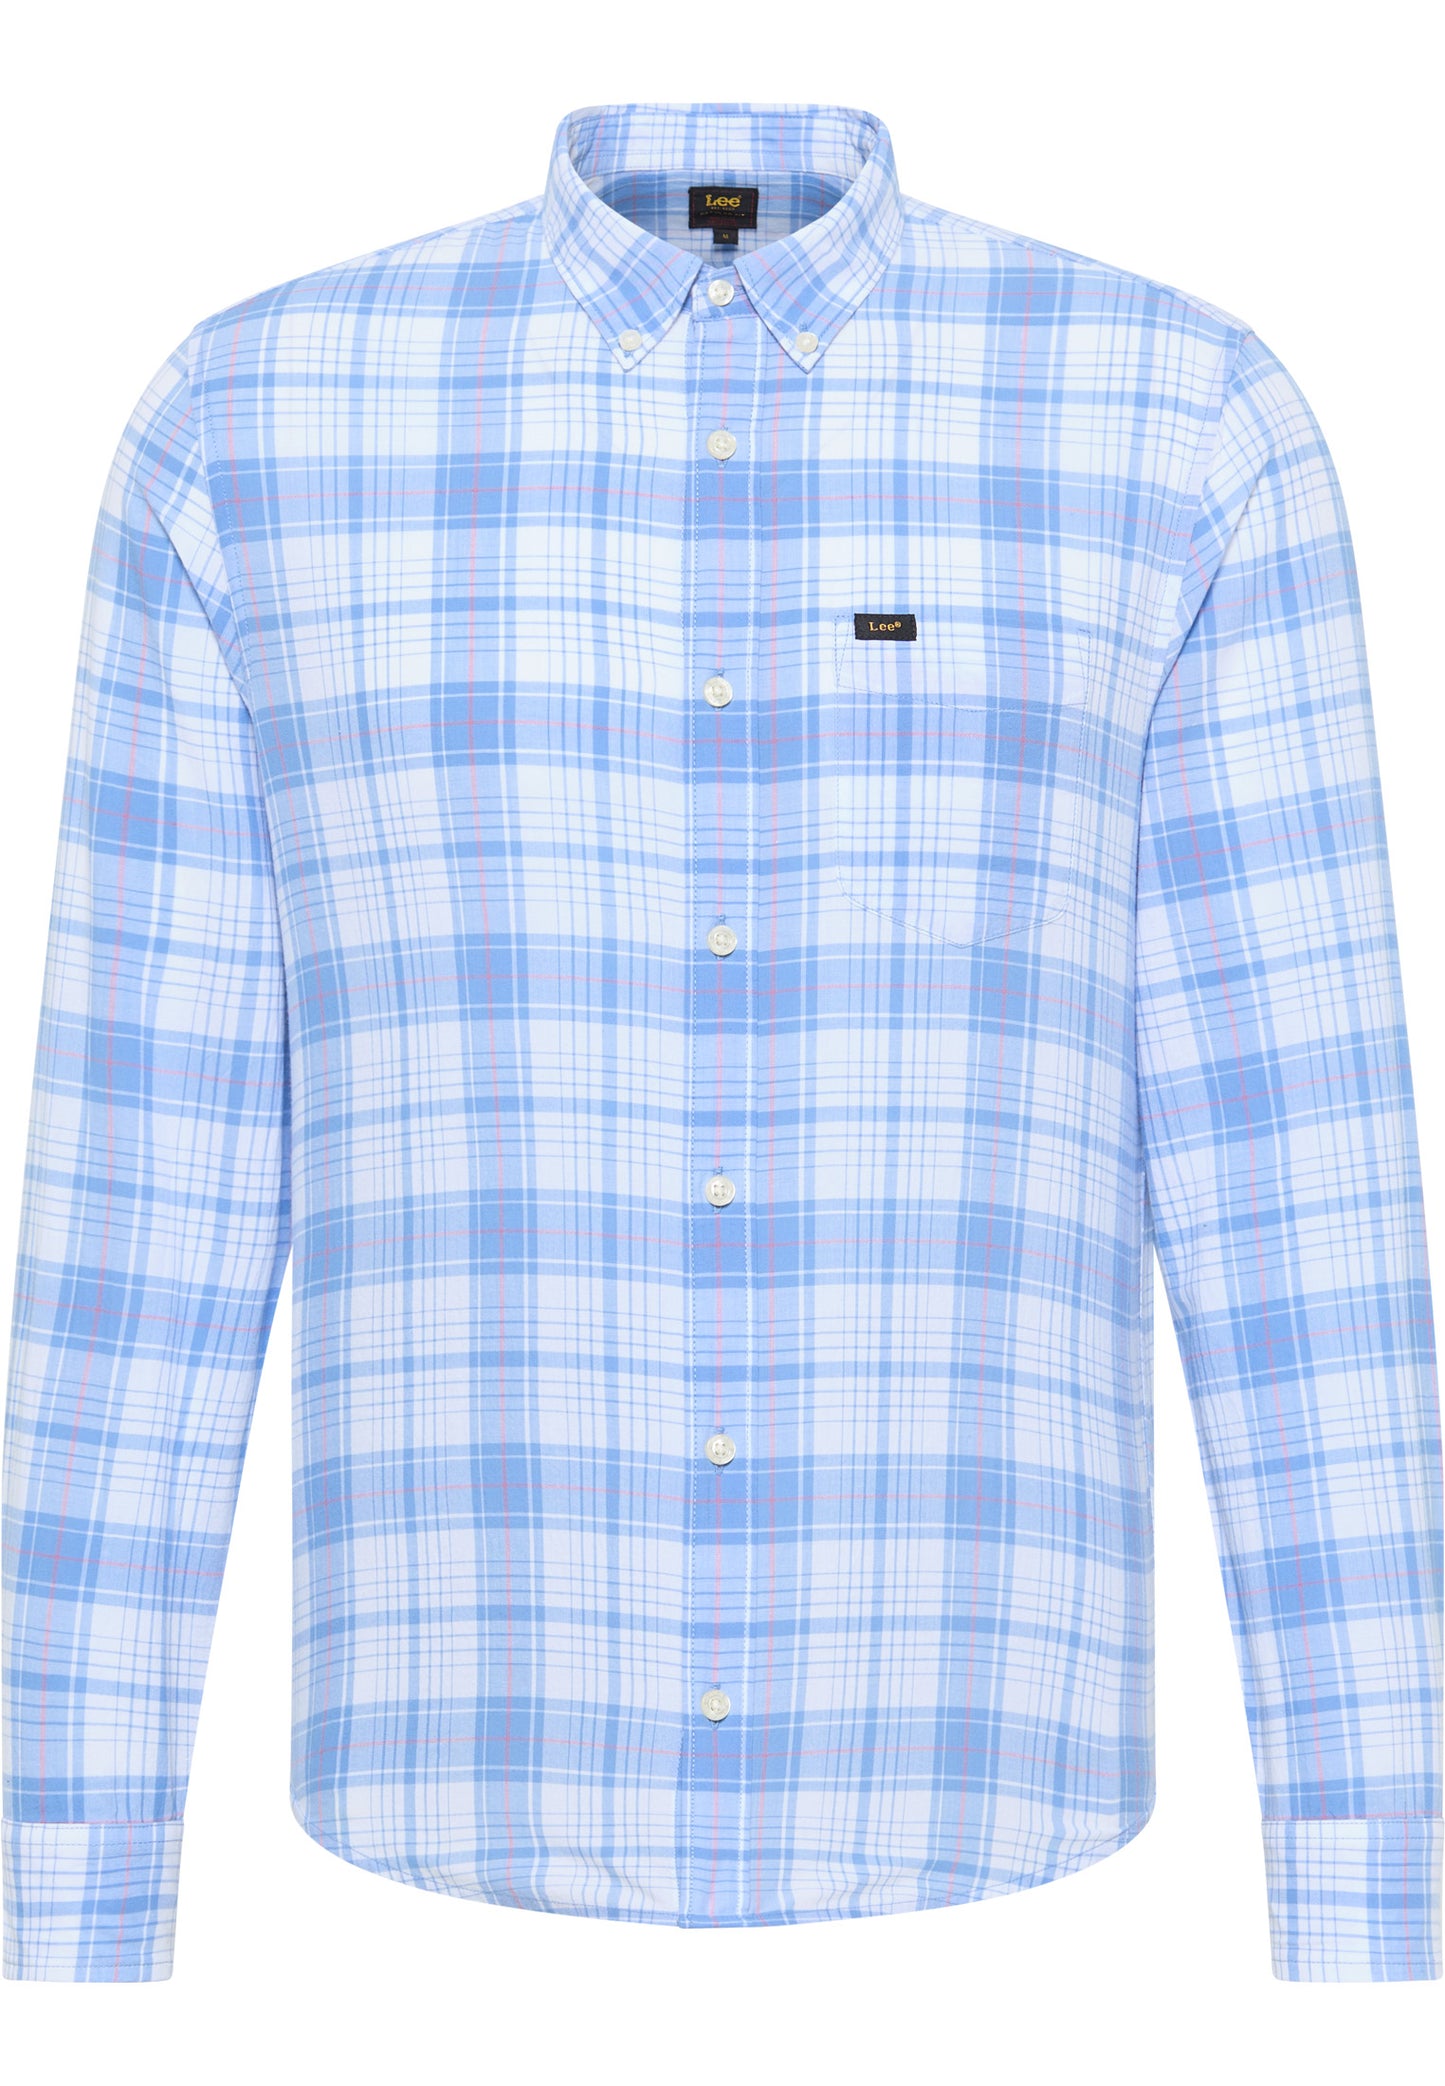 Lee Button Down Long-Sleeved Prep Blue Shirt